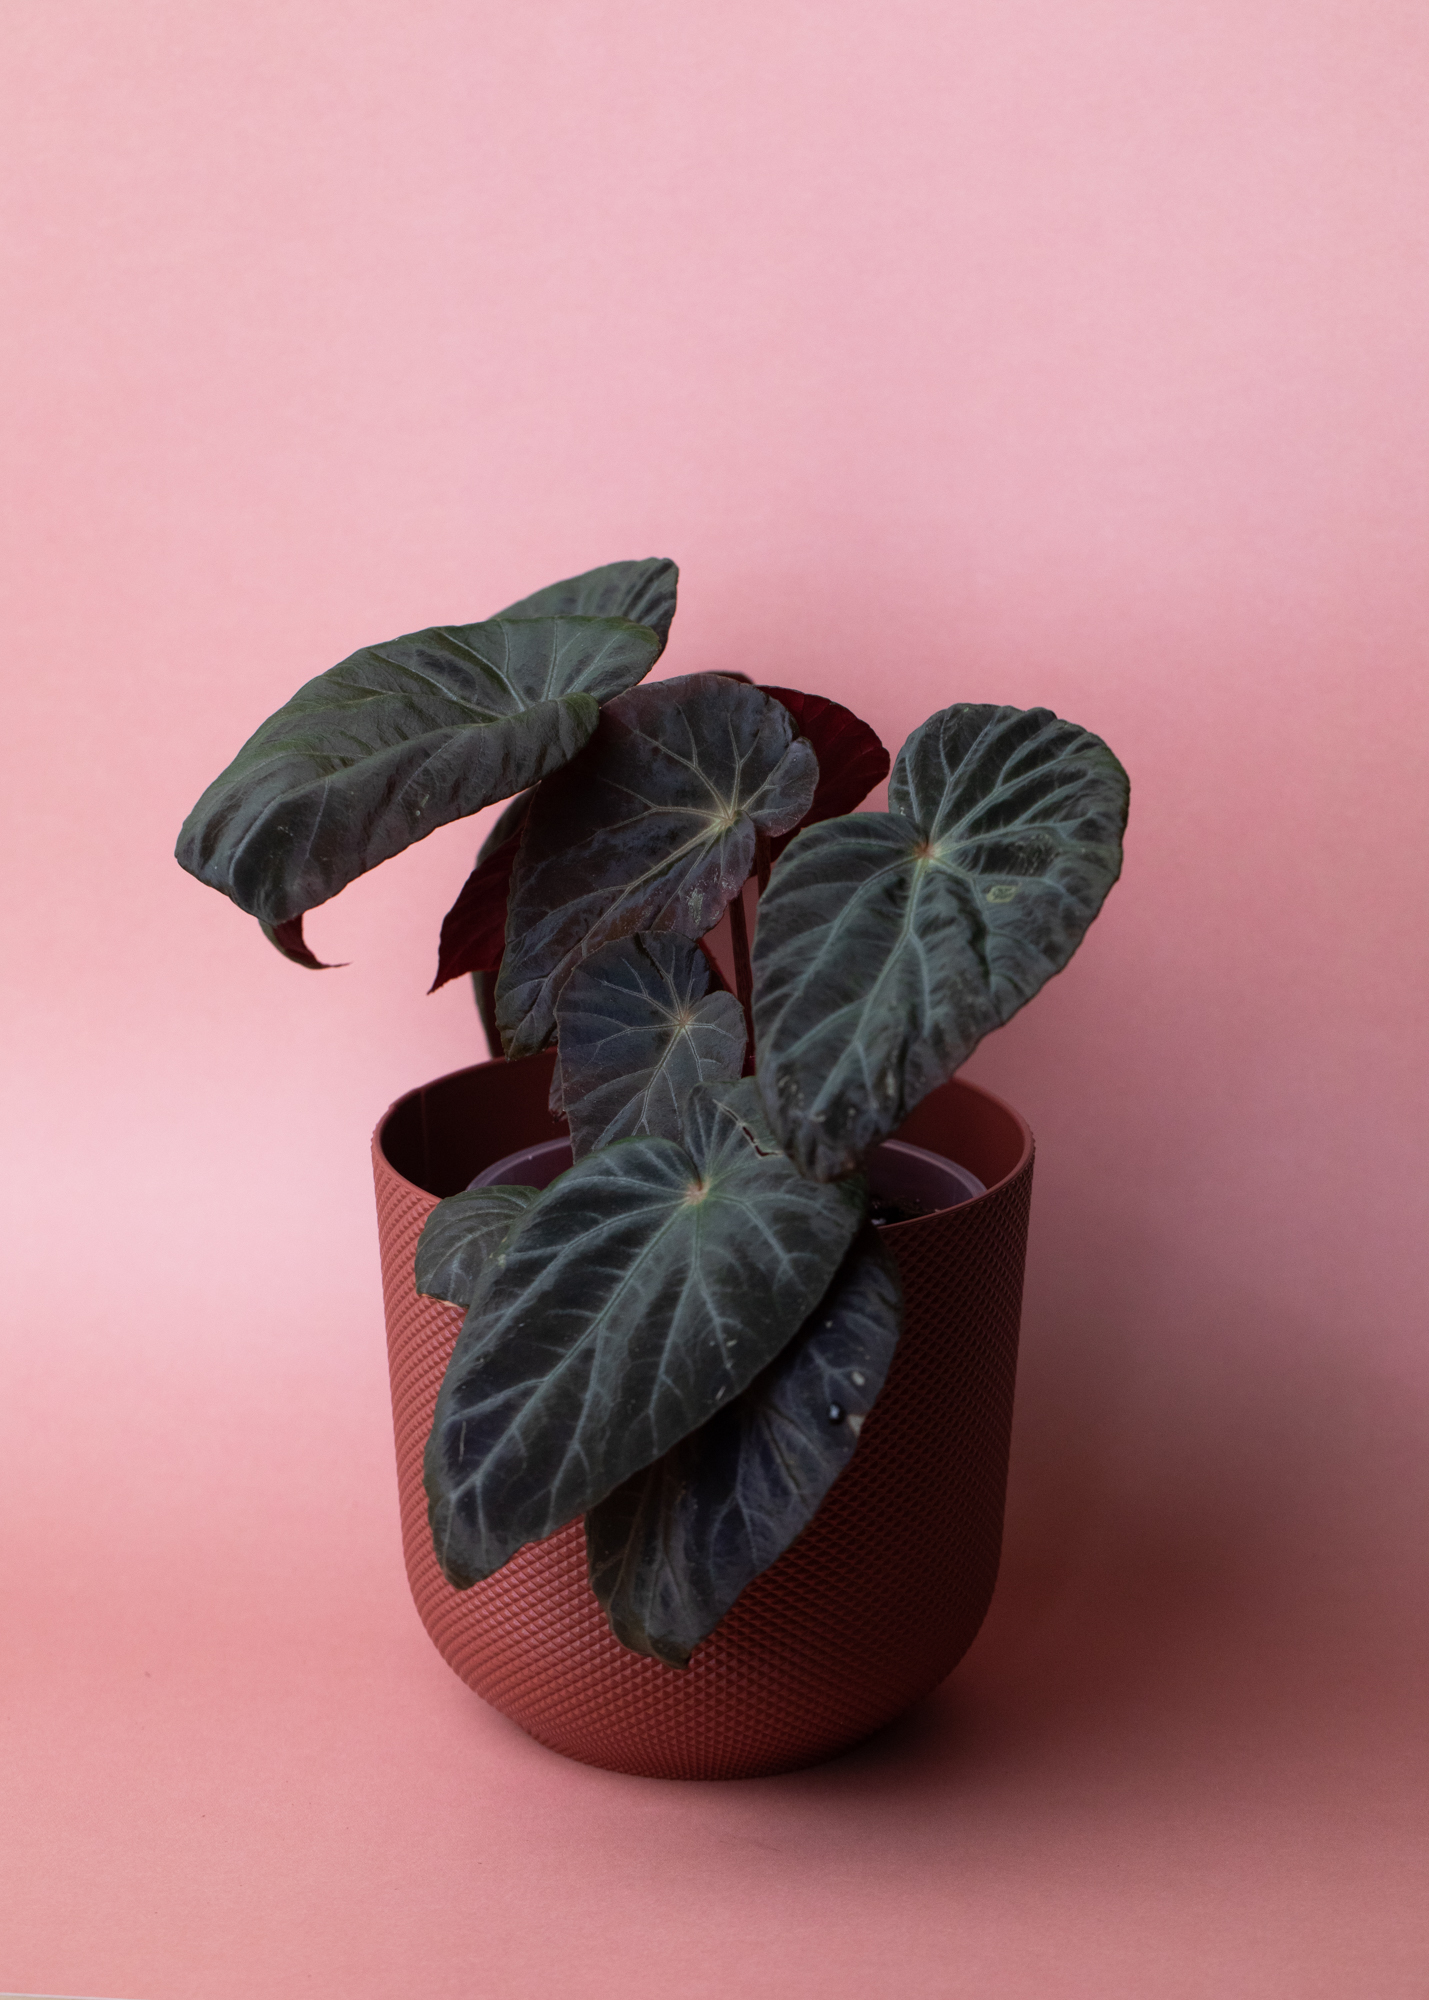 Begonia Burkillii Dark Form